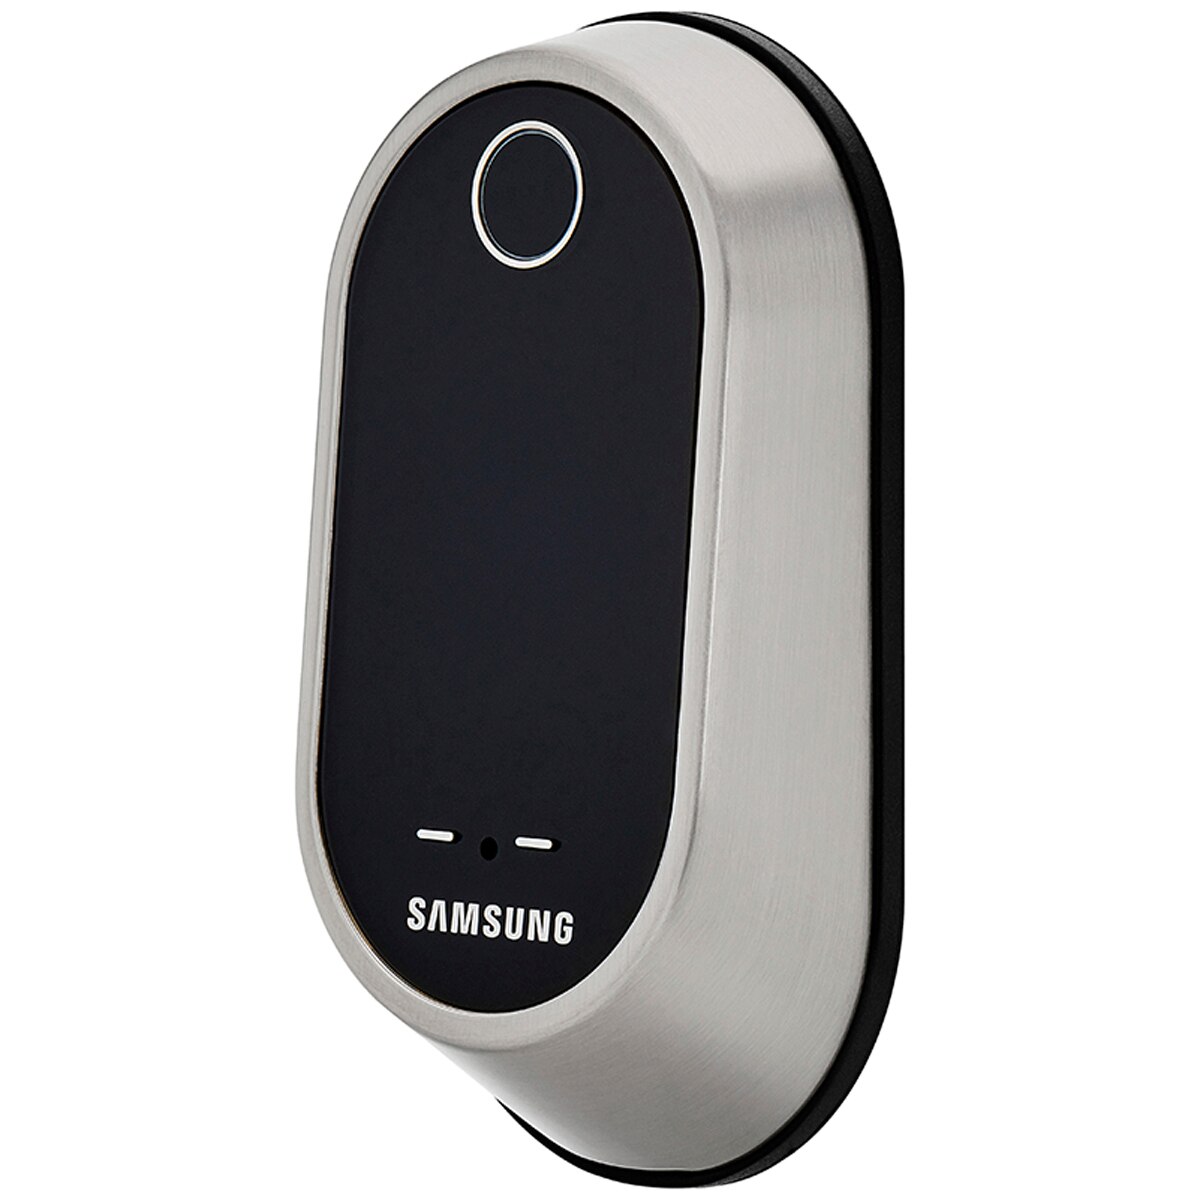 Samsung A30 Smart Lock Price